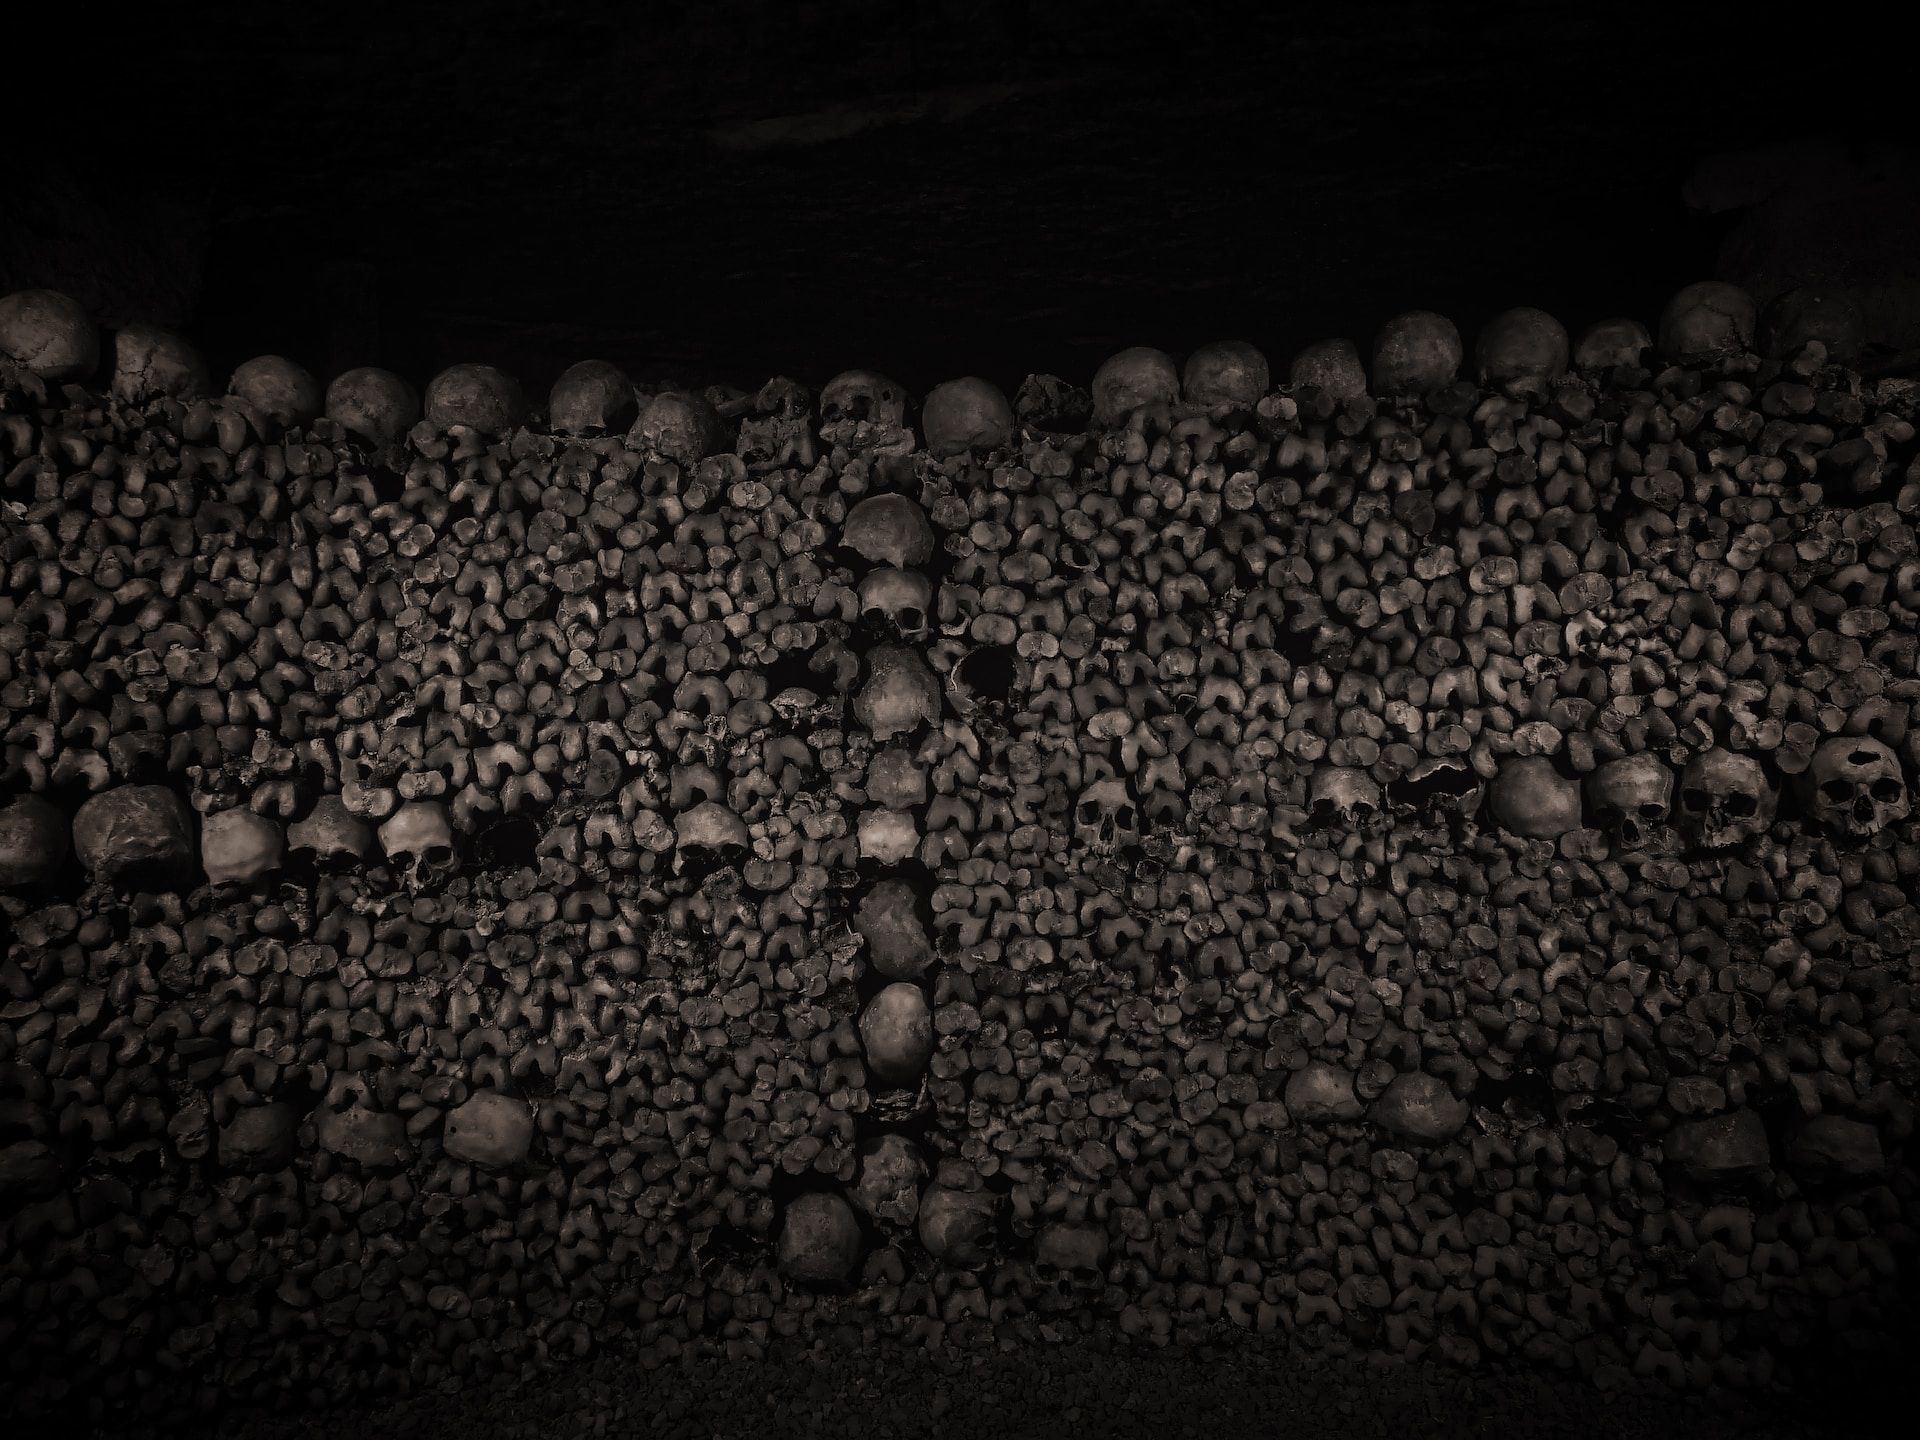 Human remains inside the Paris catacombs